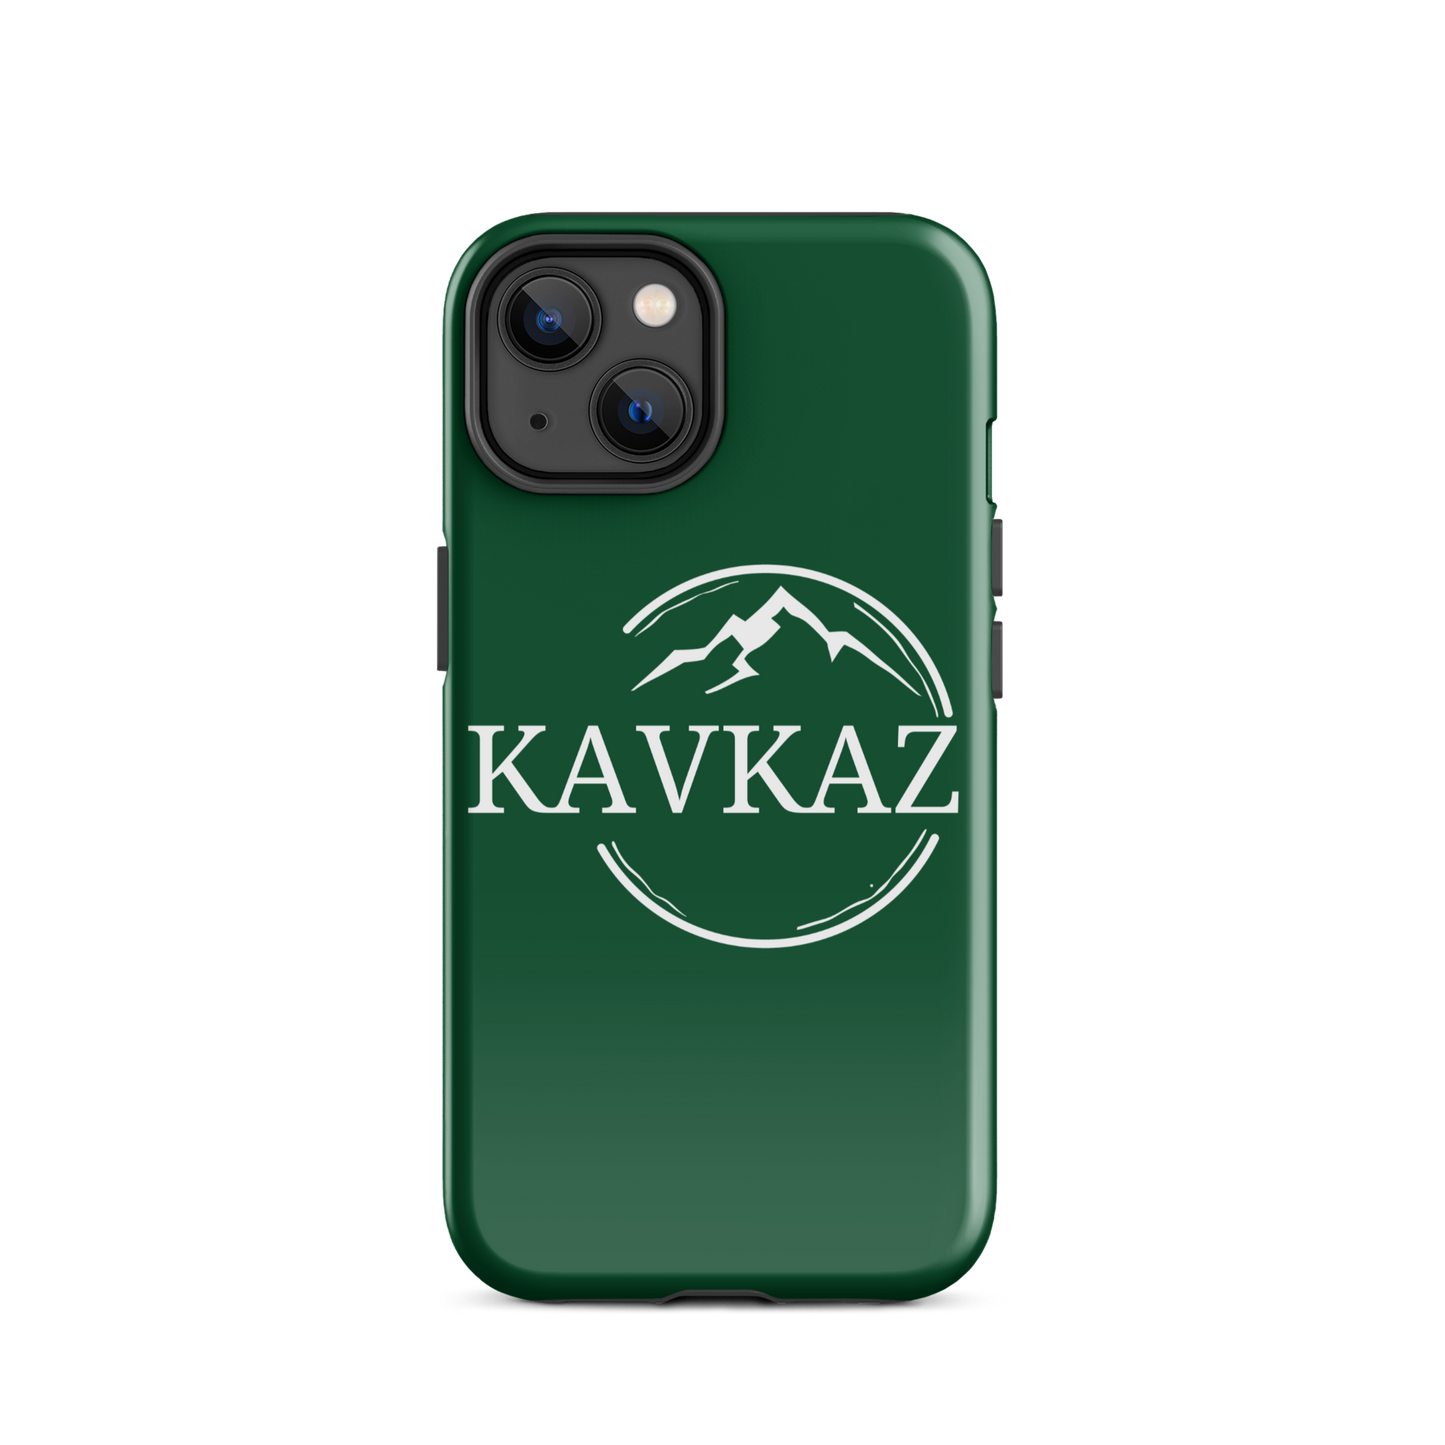 KAVKAZ2 - Green